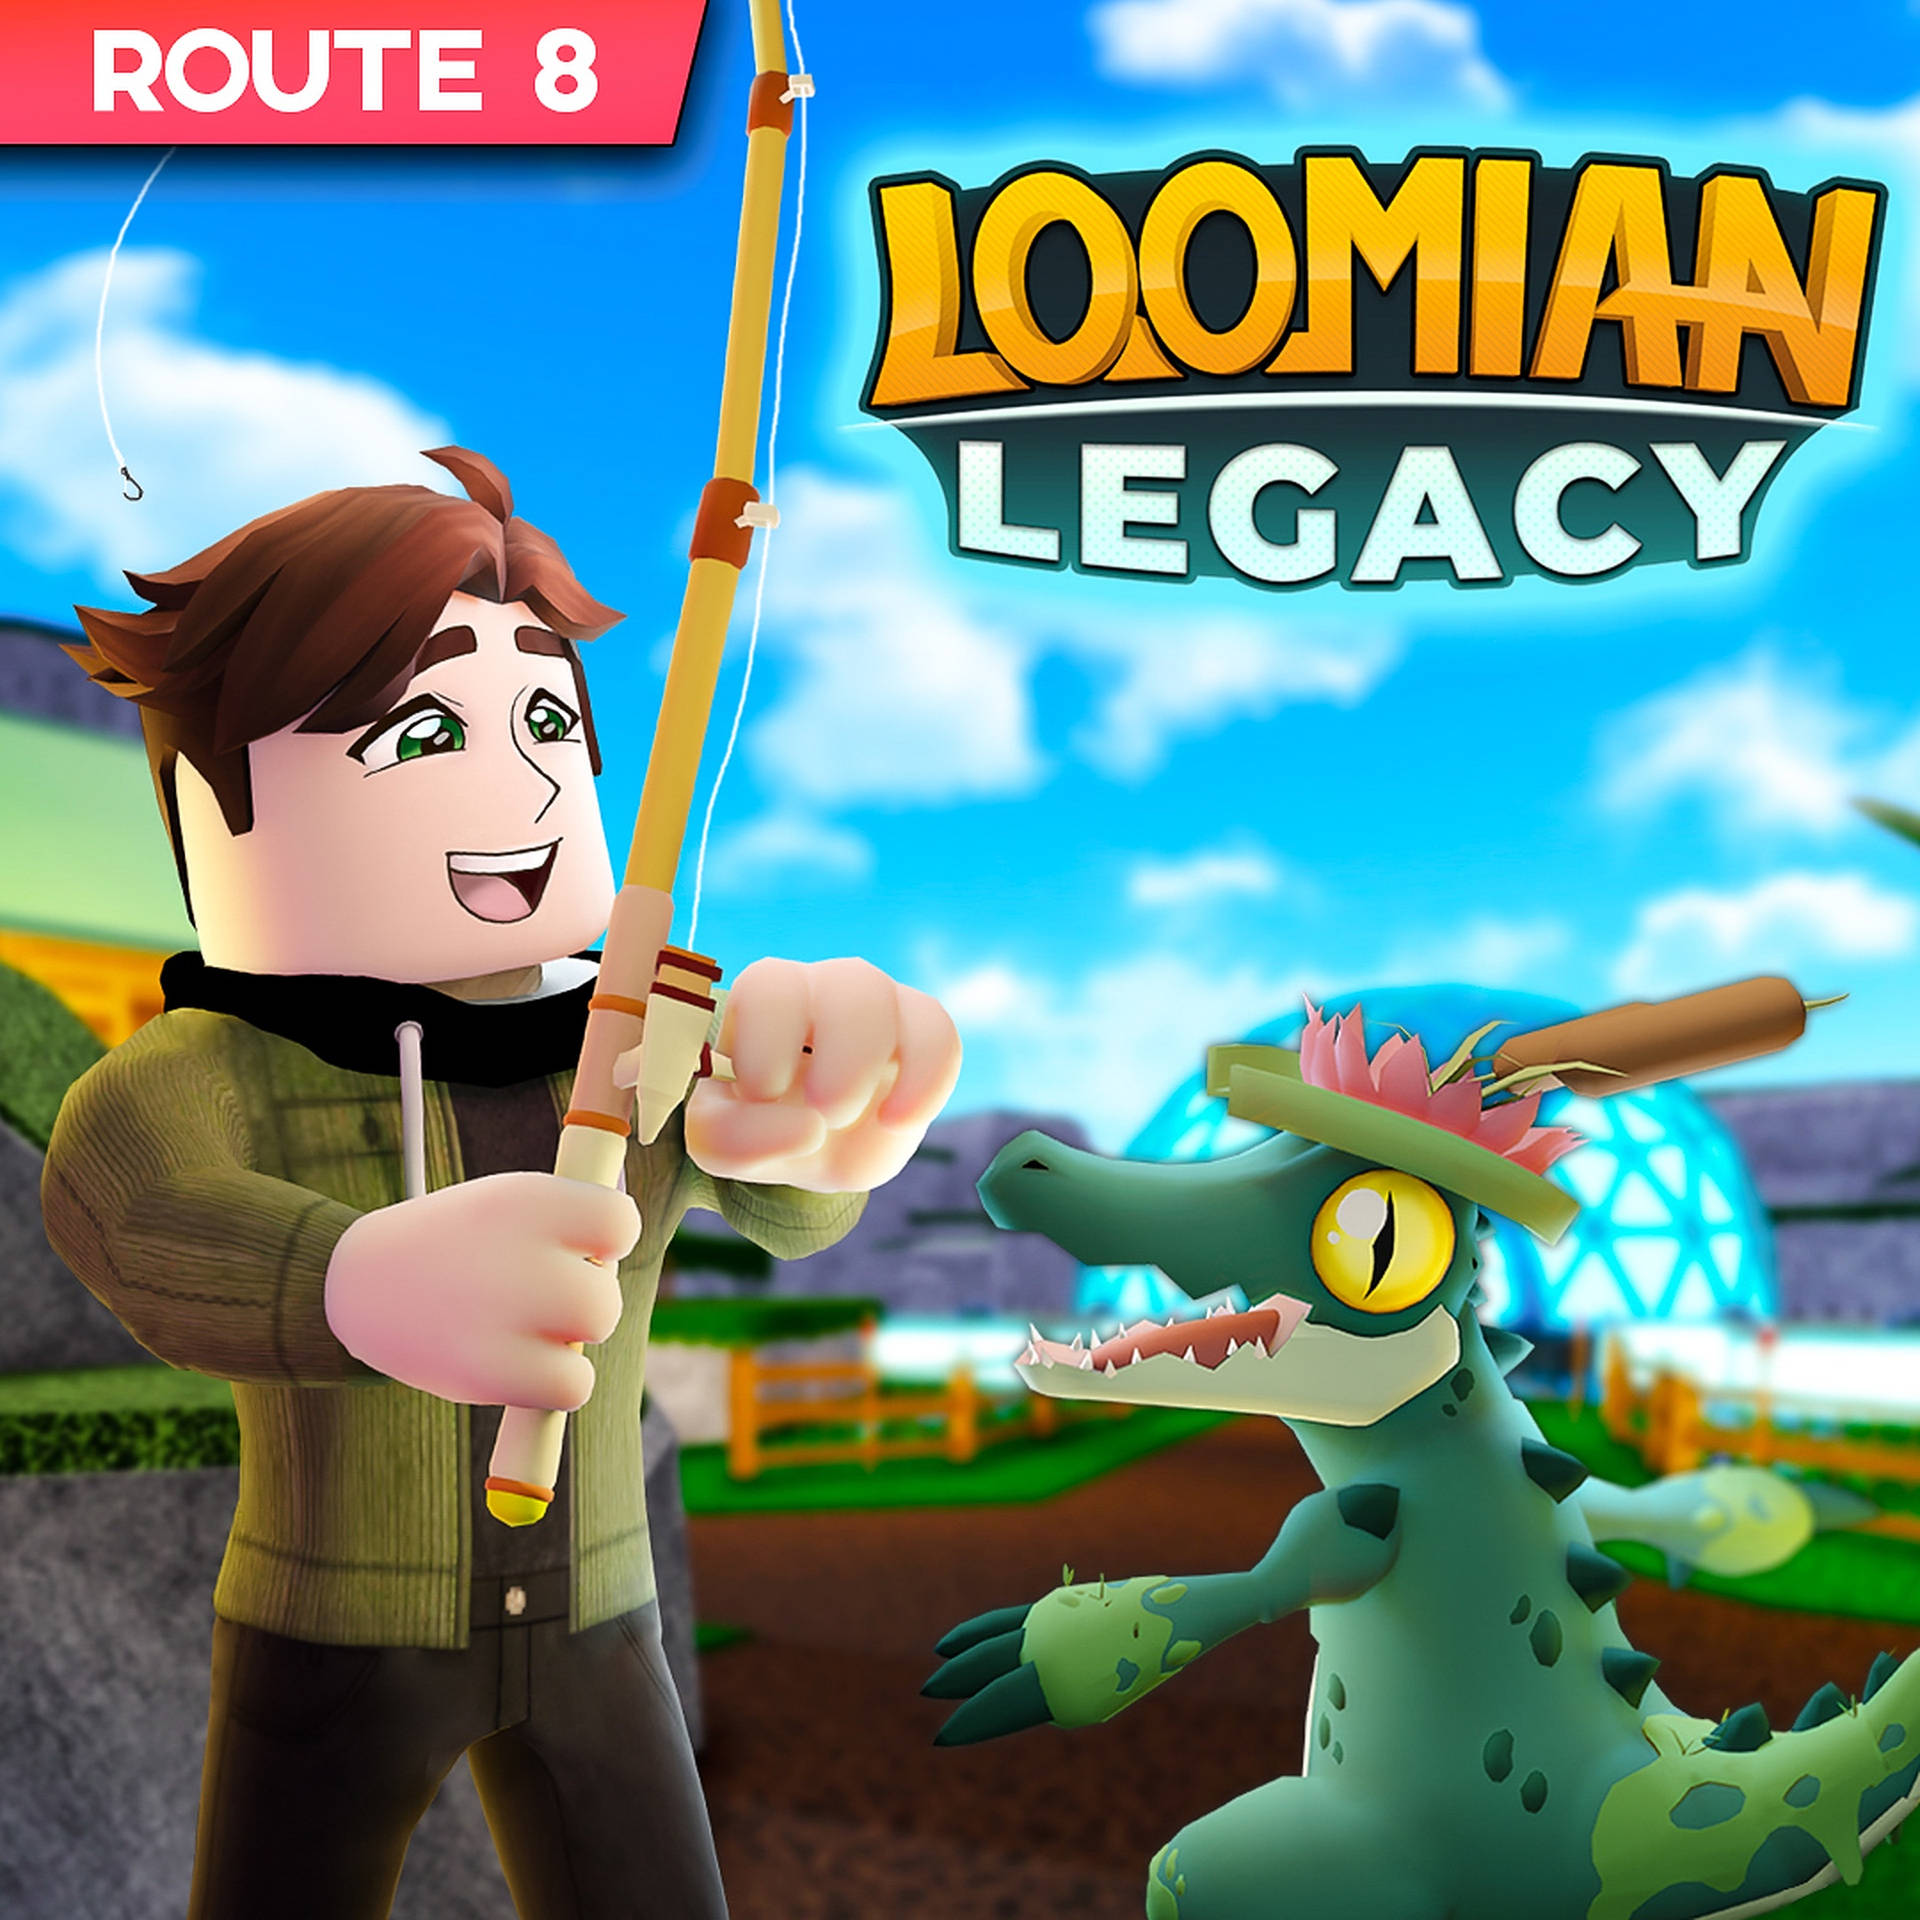 Loomian Legacy Roblox Character Wallpaper